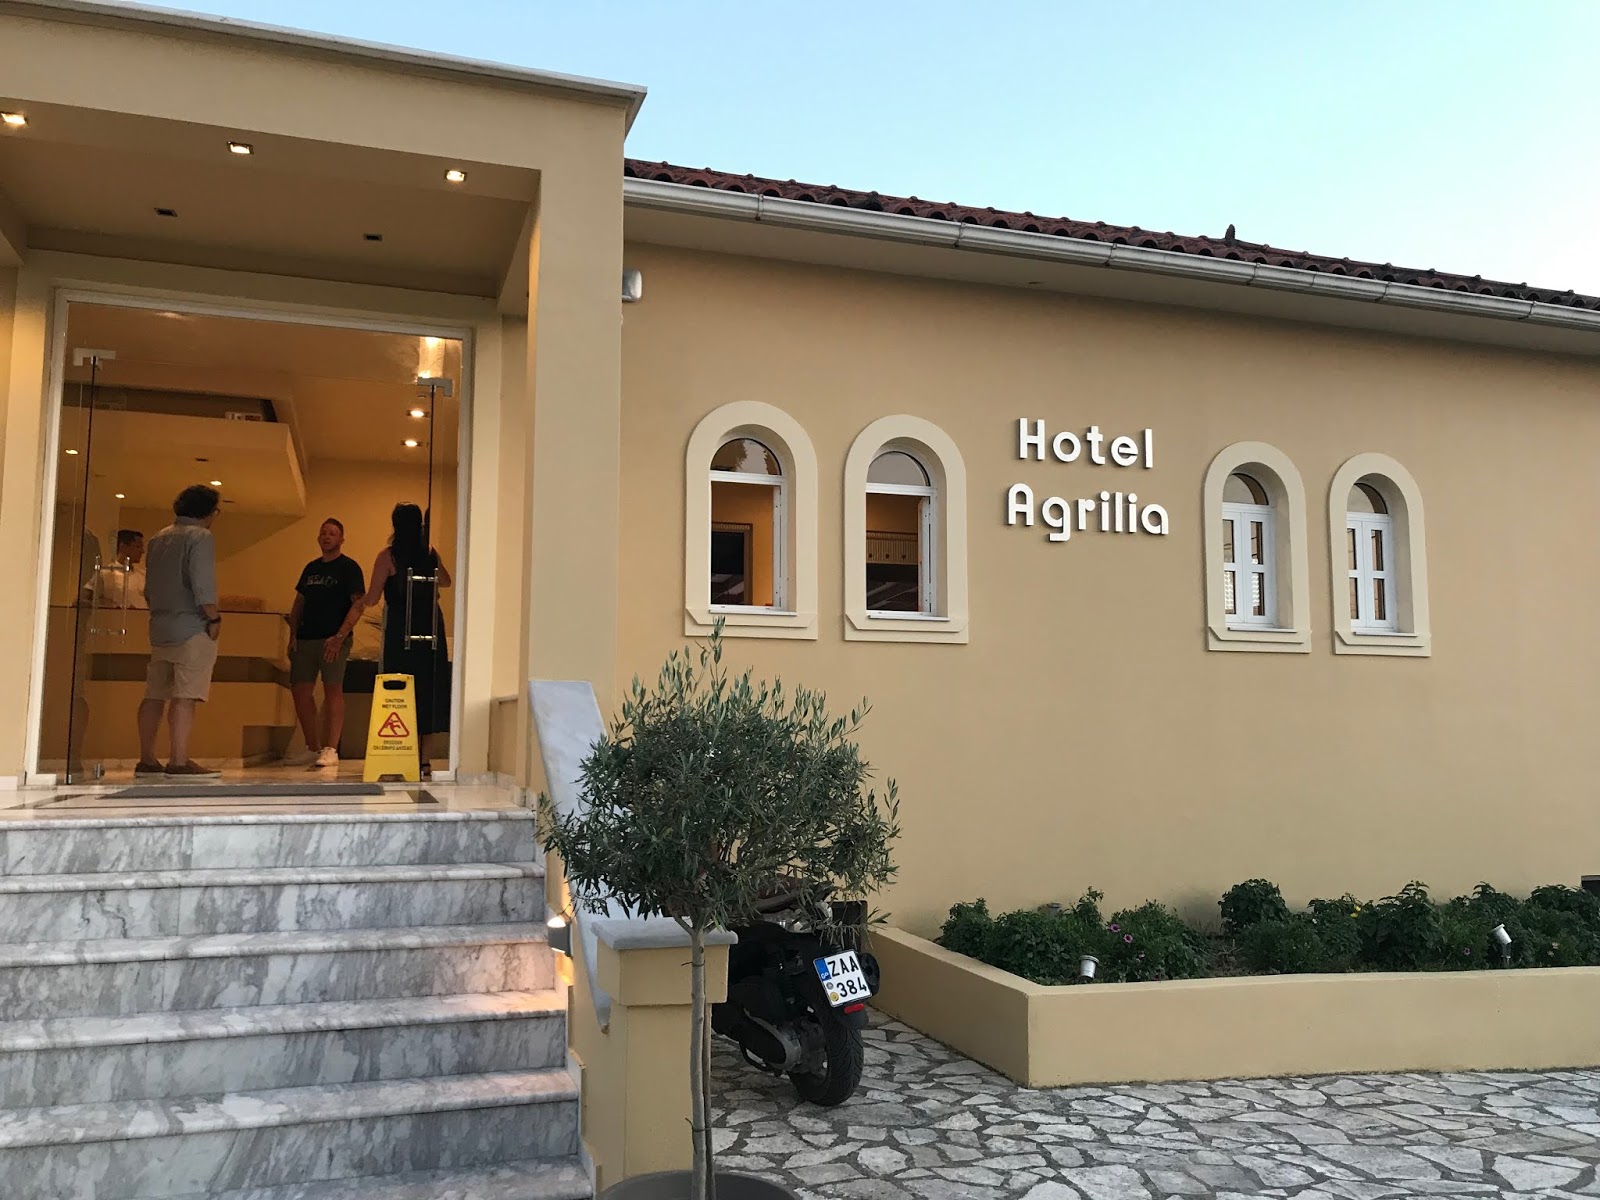 Hotel Agrilia - Laganas, Zante Review